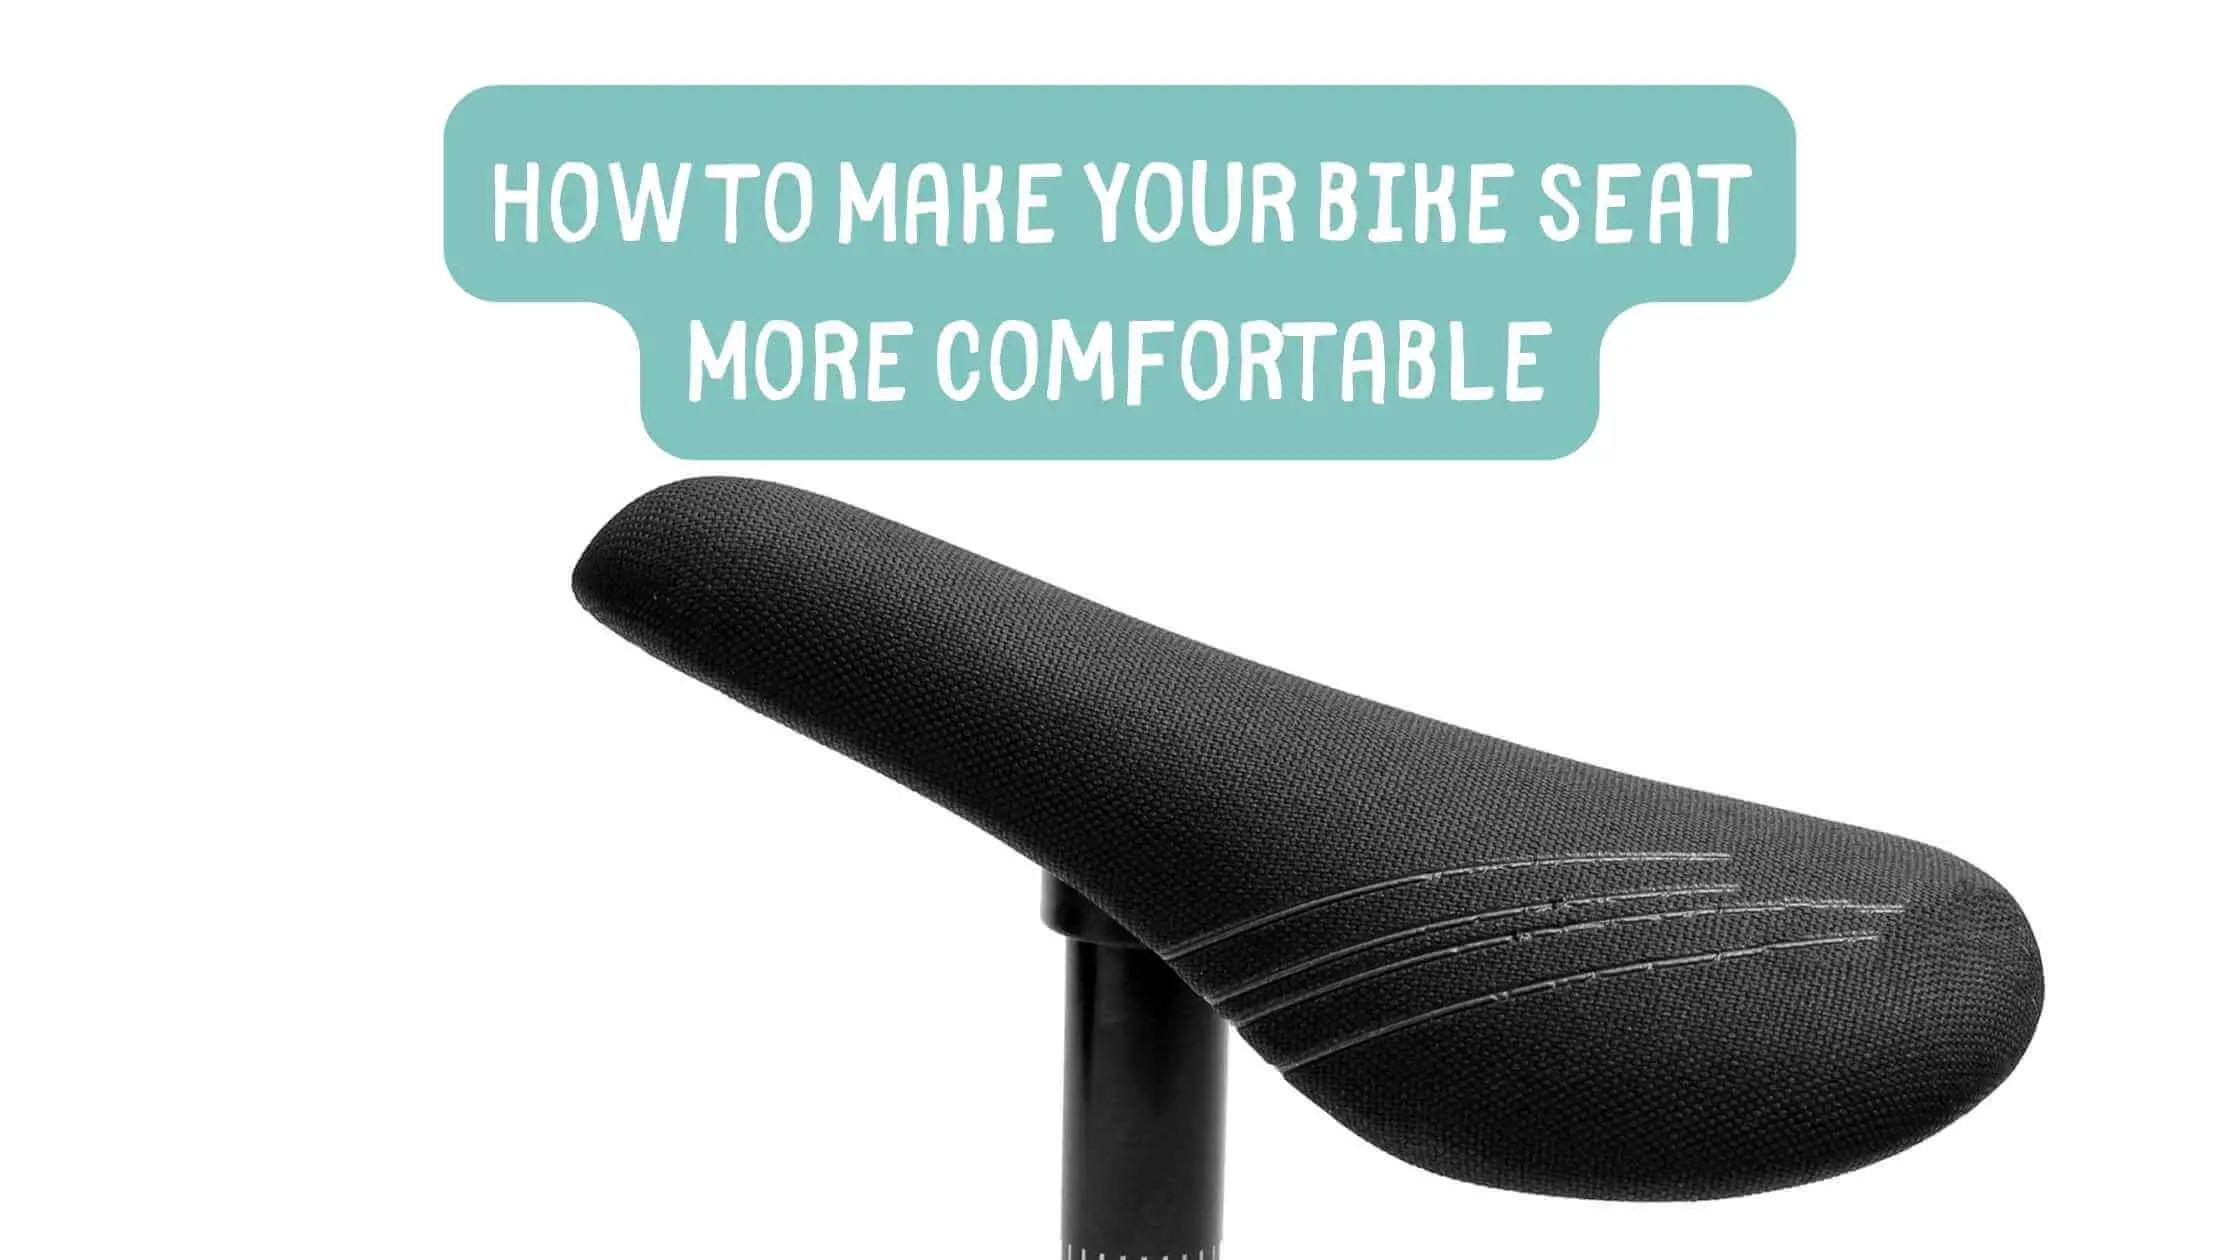 How to Make Bike Seat More Comfortable